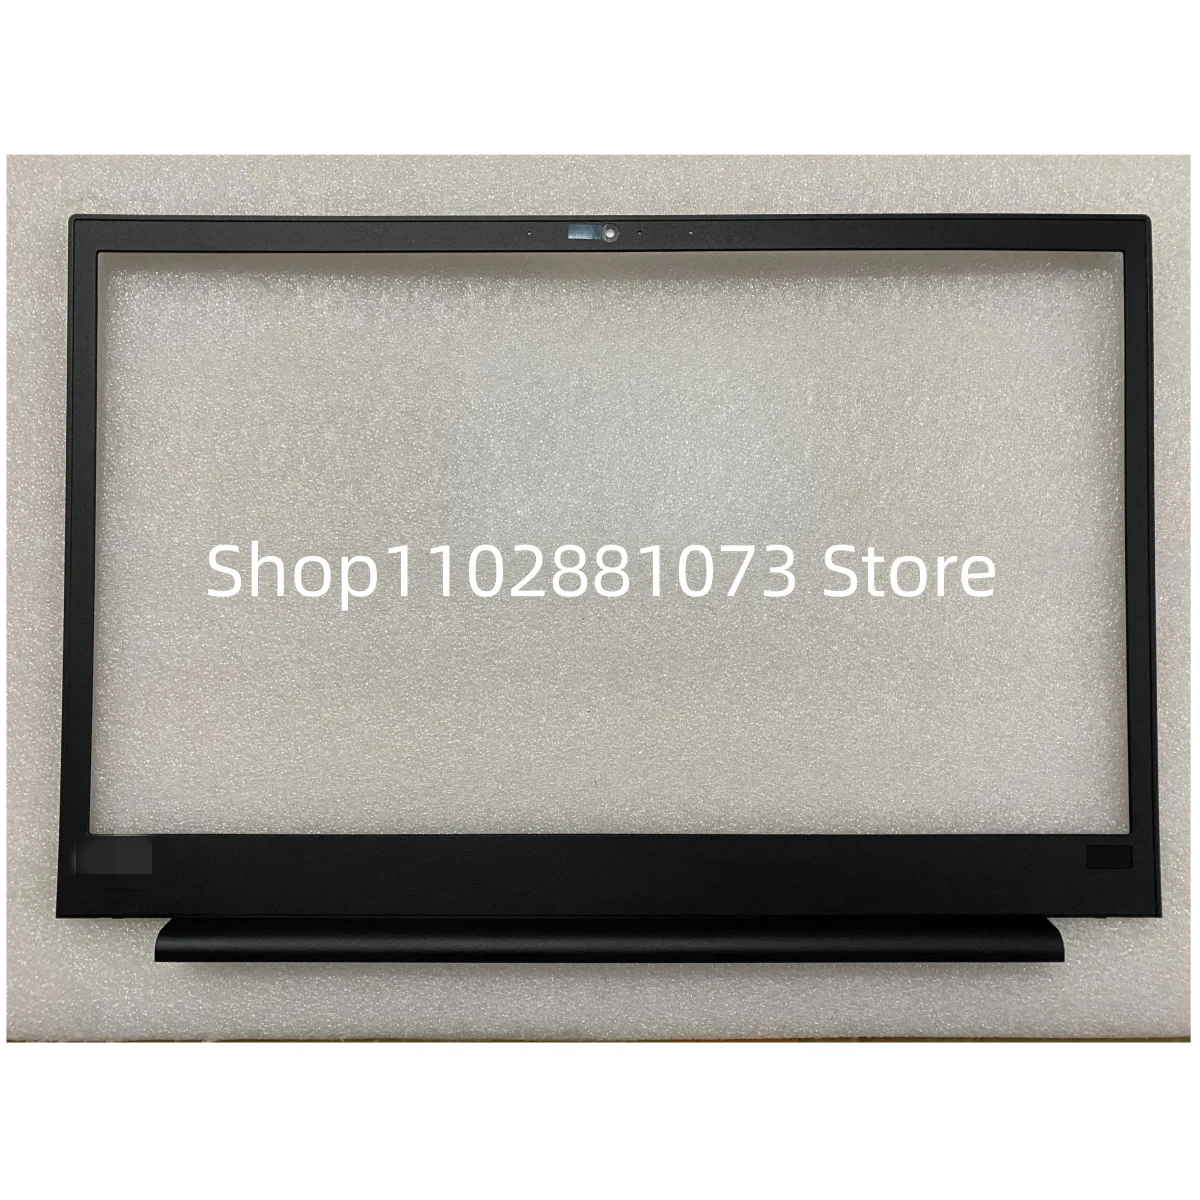 

New Original B Shell LCD Bezel Case Cover for Lenovo ThinkPad E580 E585 E590 E595 Laptop 01LW414 AP167000100